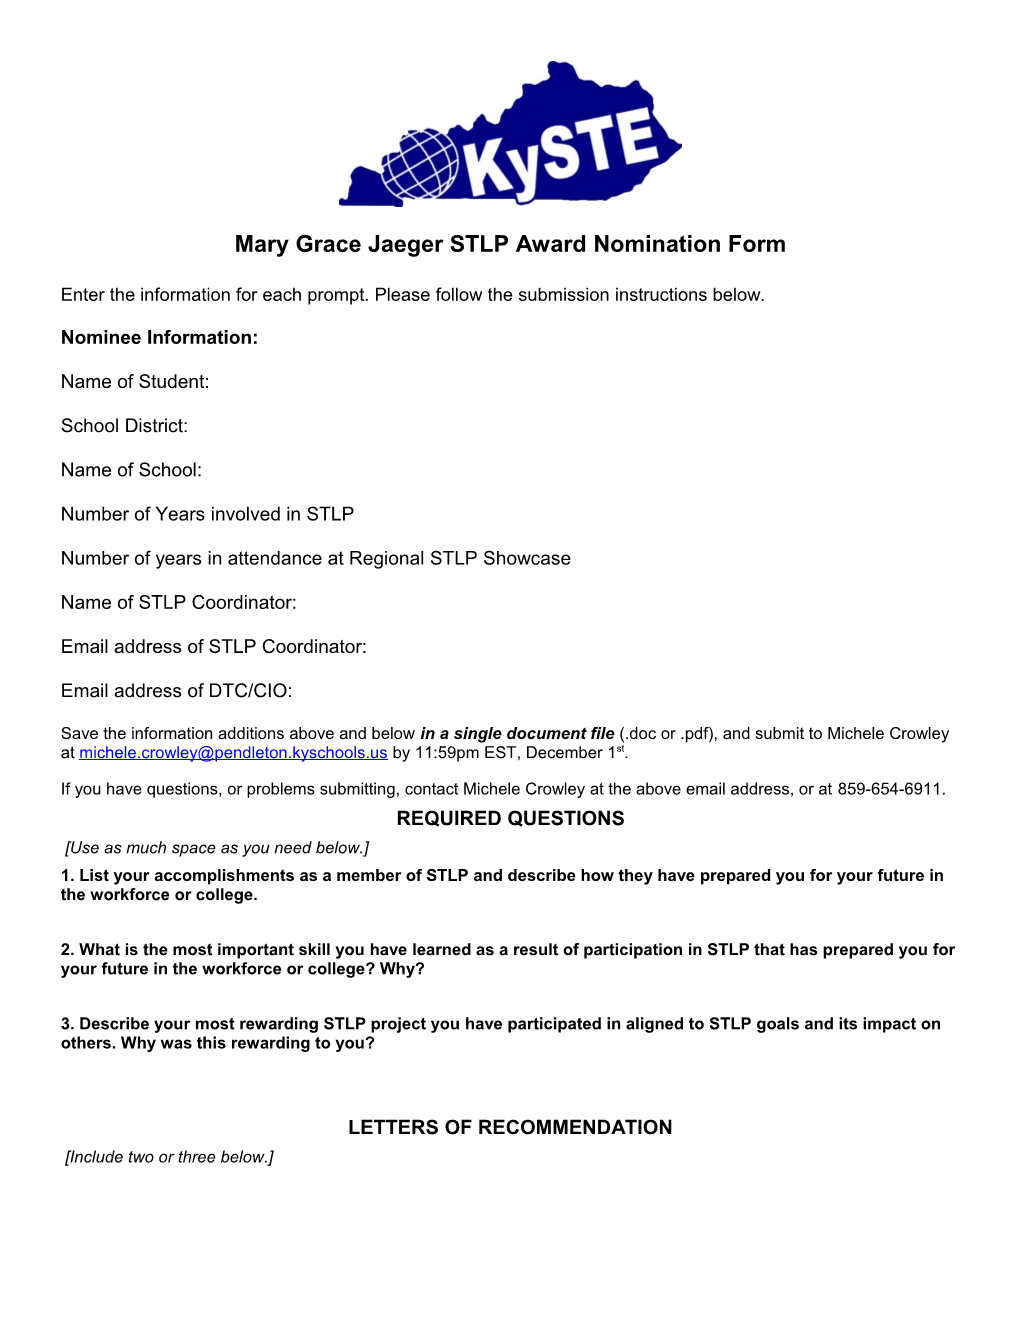 Mary Grace Jaeger STLP Award Nomination Form